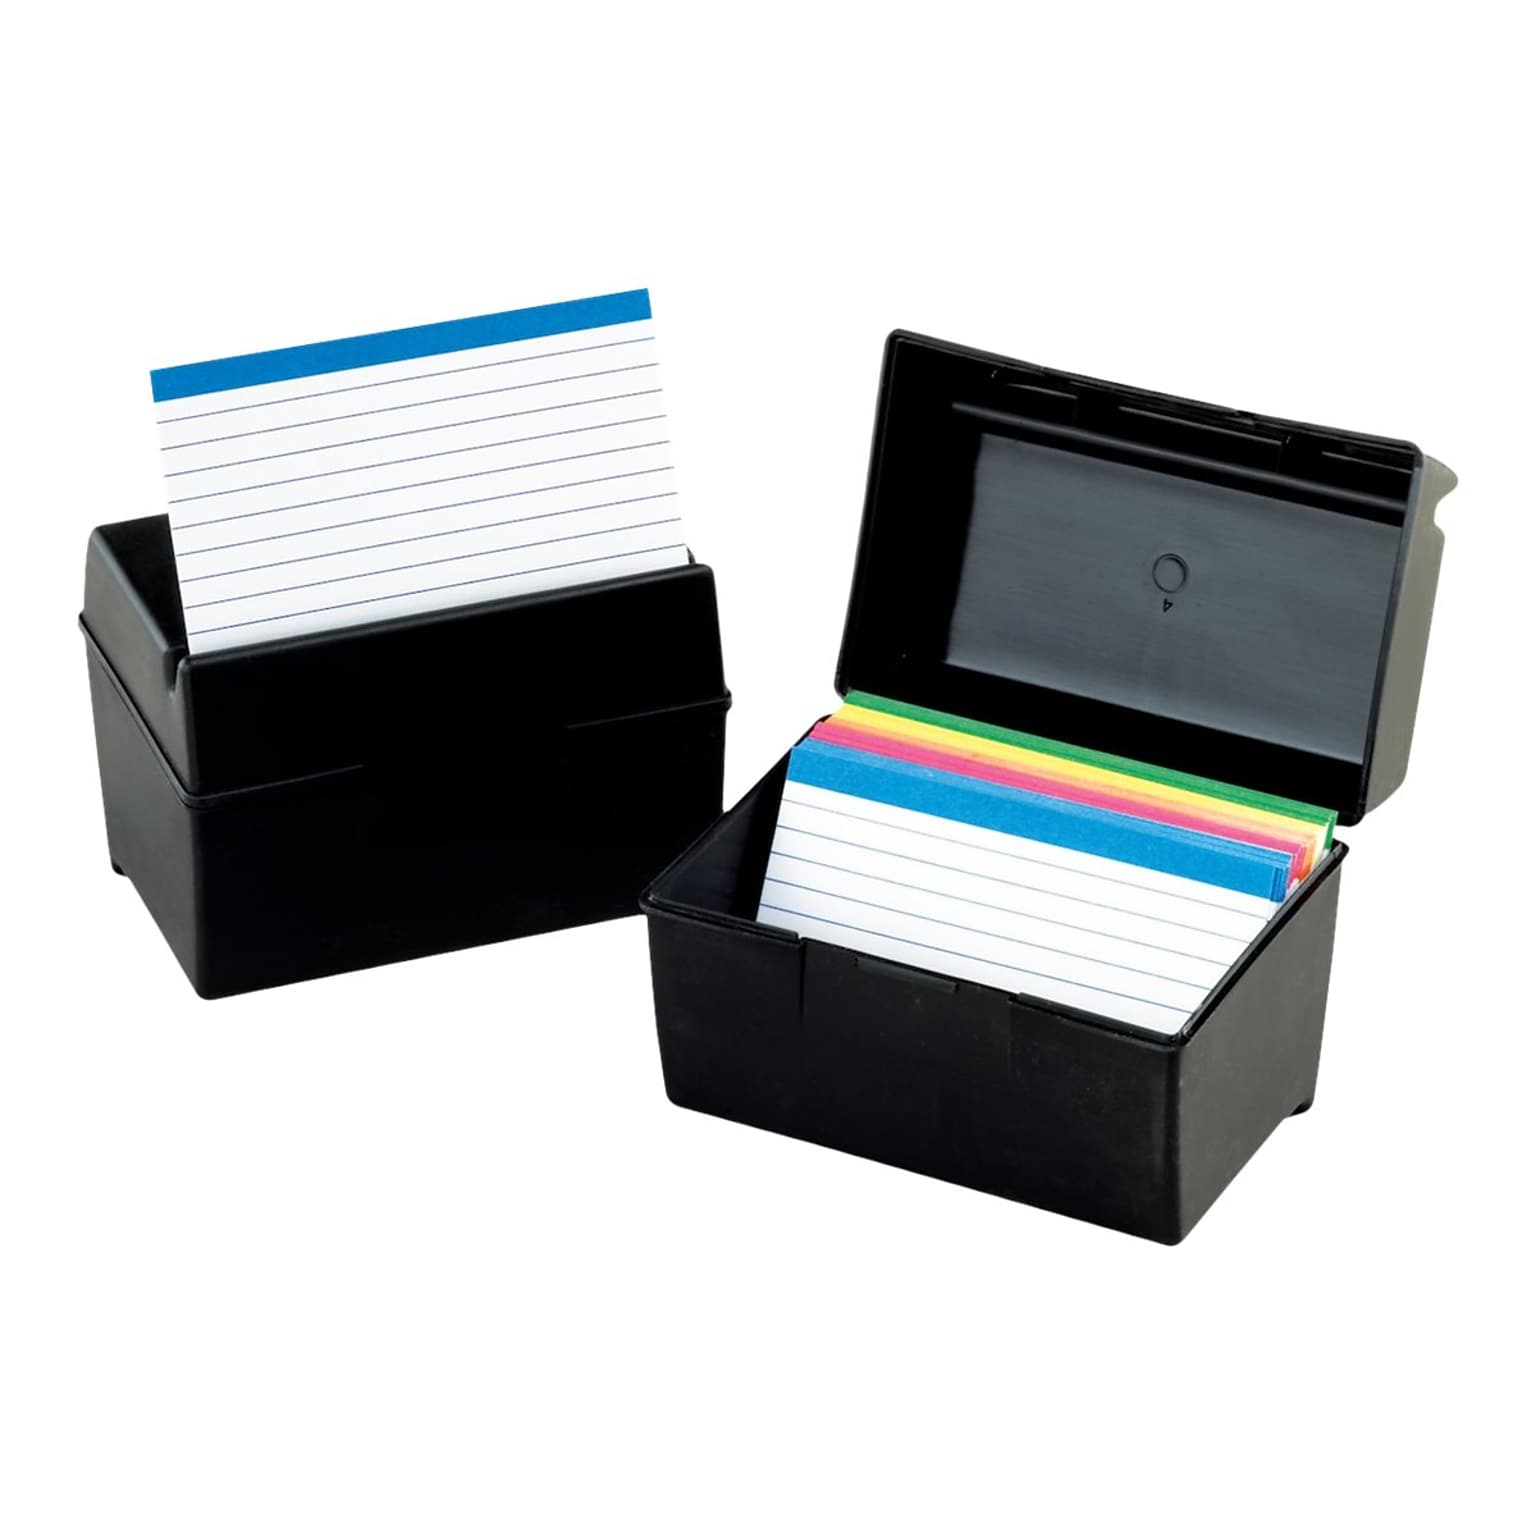 Oxford Index Card File Box, 300-Card Capacity, Black (01351)